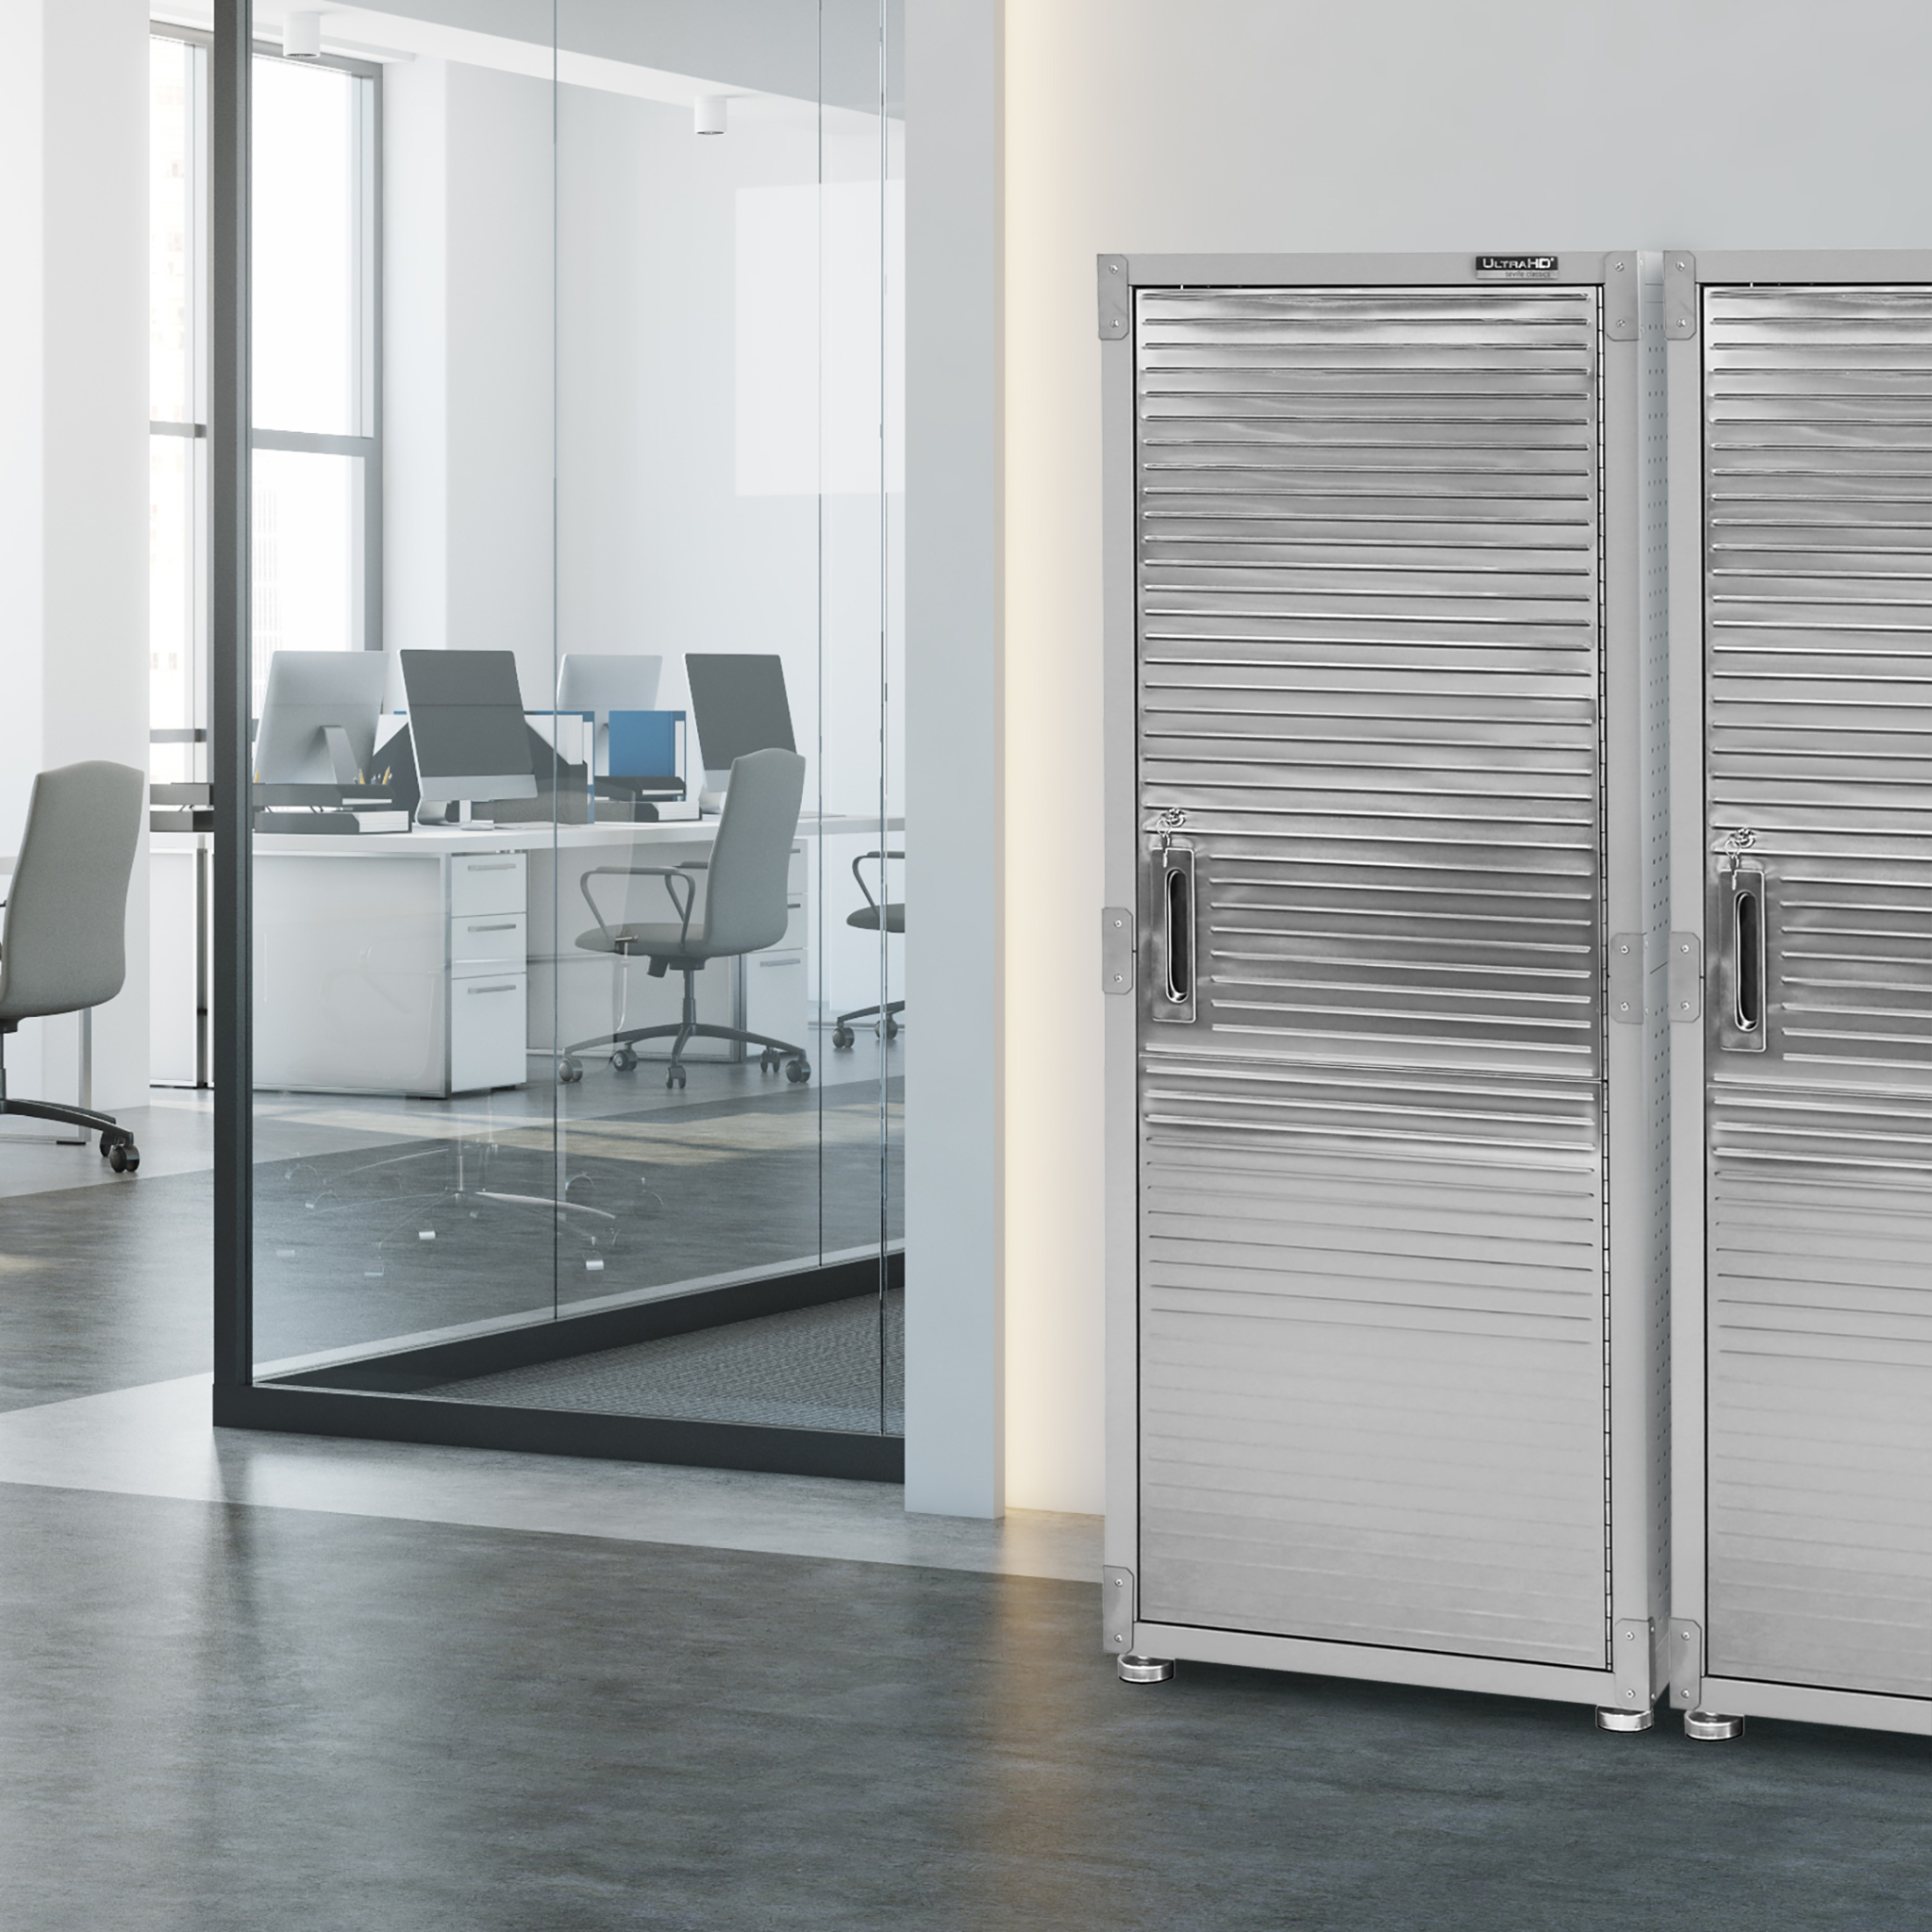 Seville Classics UltraHD Steel Storage Locker Cabinet, 24" W x 18" D x 66" H, Granite Gray - image 4 of 11